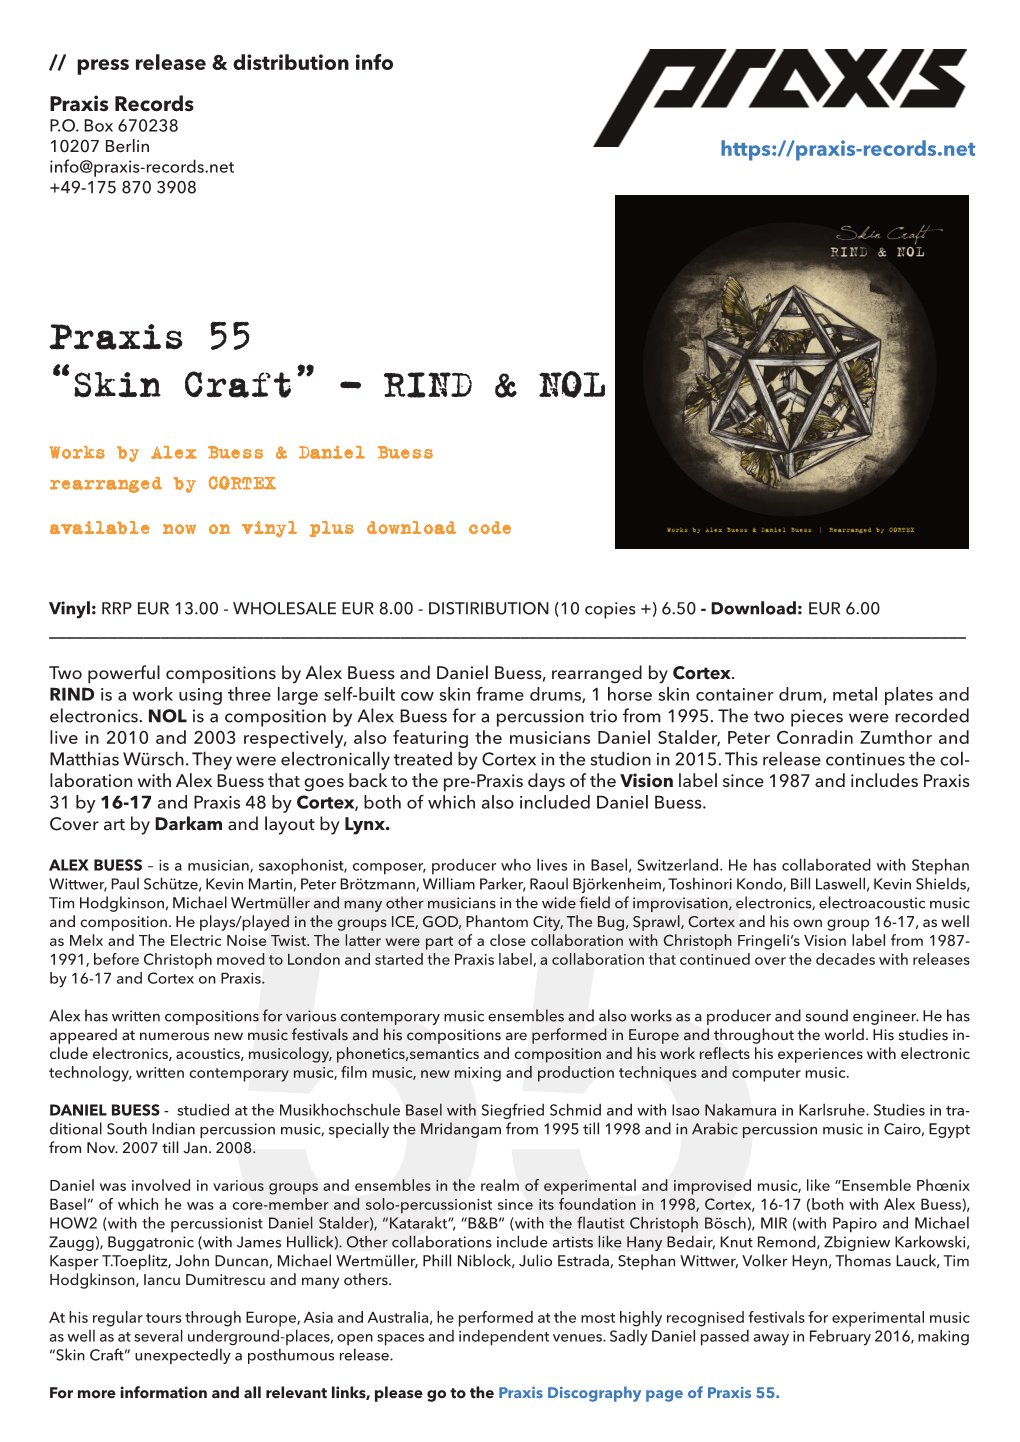 Praxis-55 Press-Release 2021